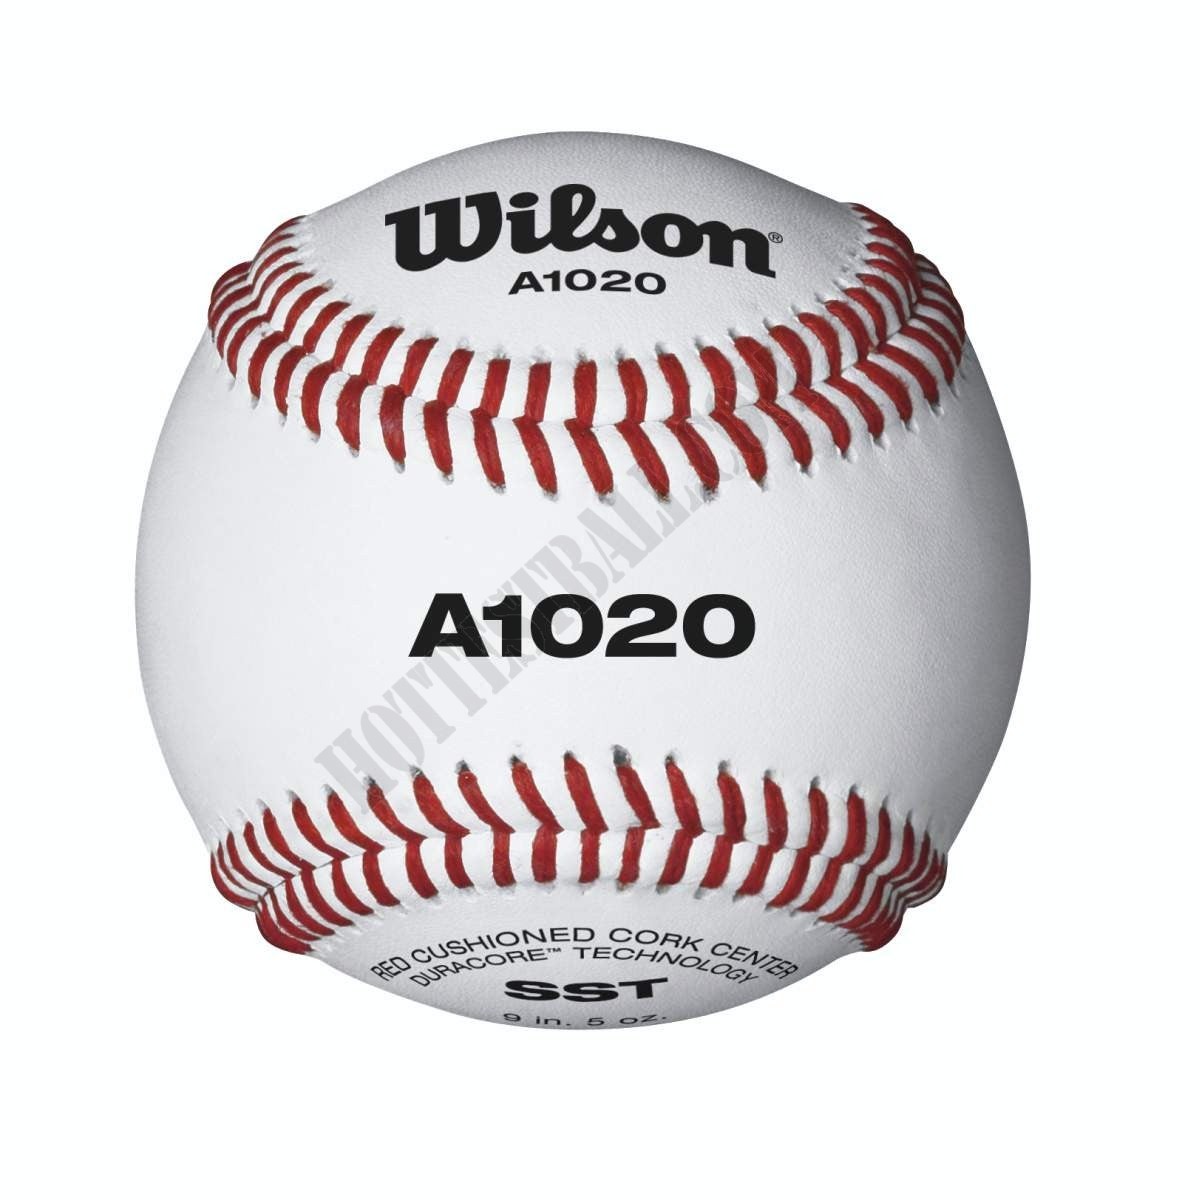 A1020 Champion Series SST Baseballs - Wilson Discount Store - -0